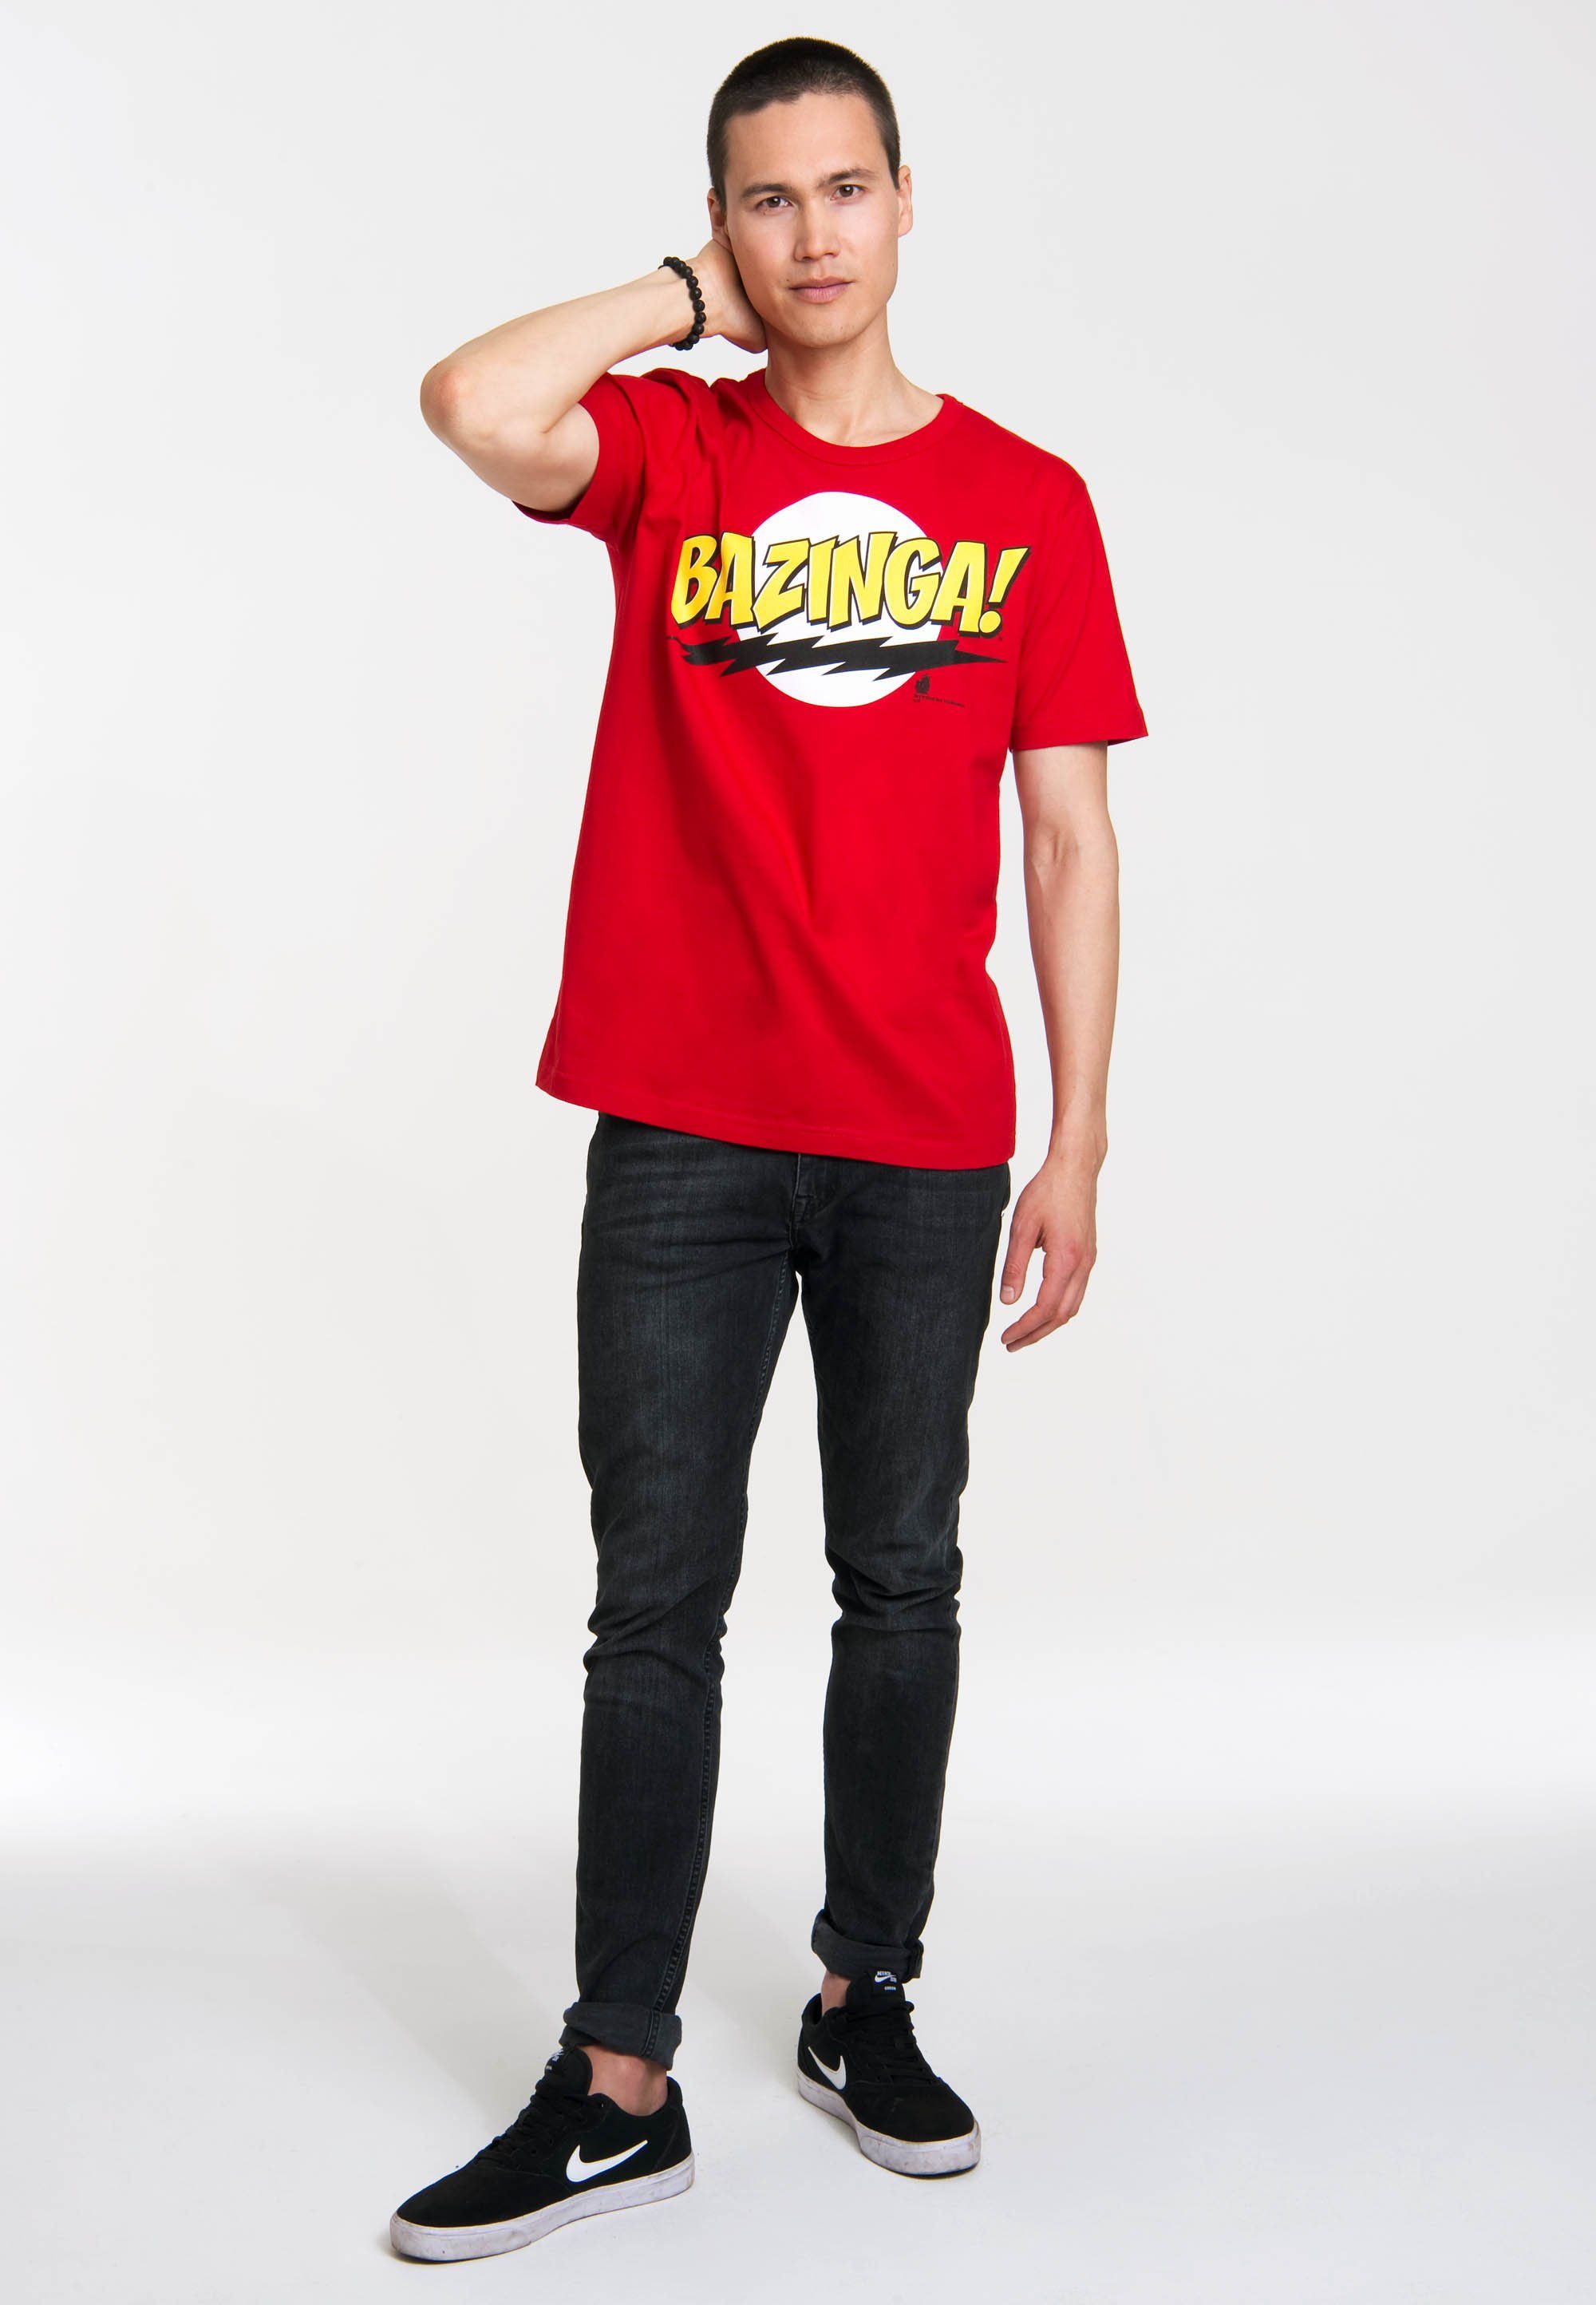 LOGOSHIRT T-Shirt Bazinga - The Big Bang Theory mit coolem Frontdruck | T-Shirts